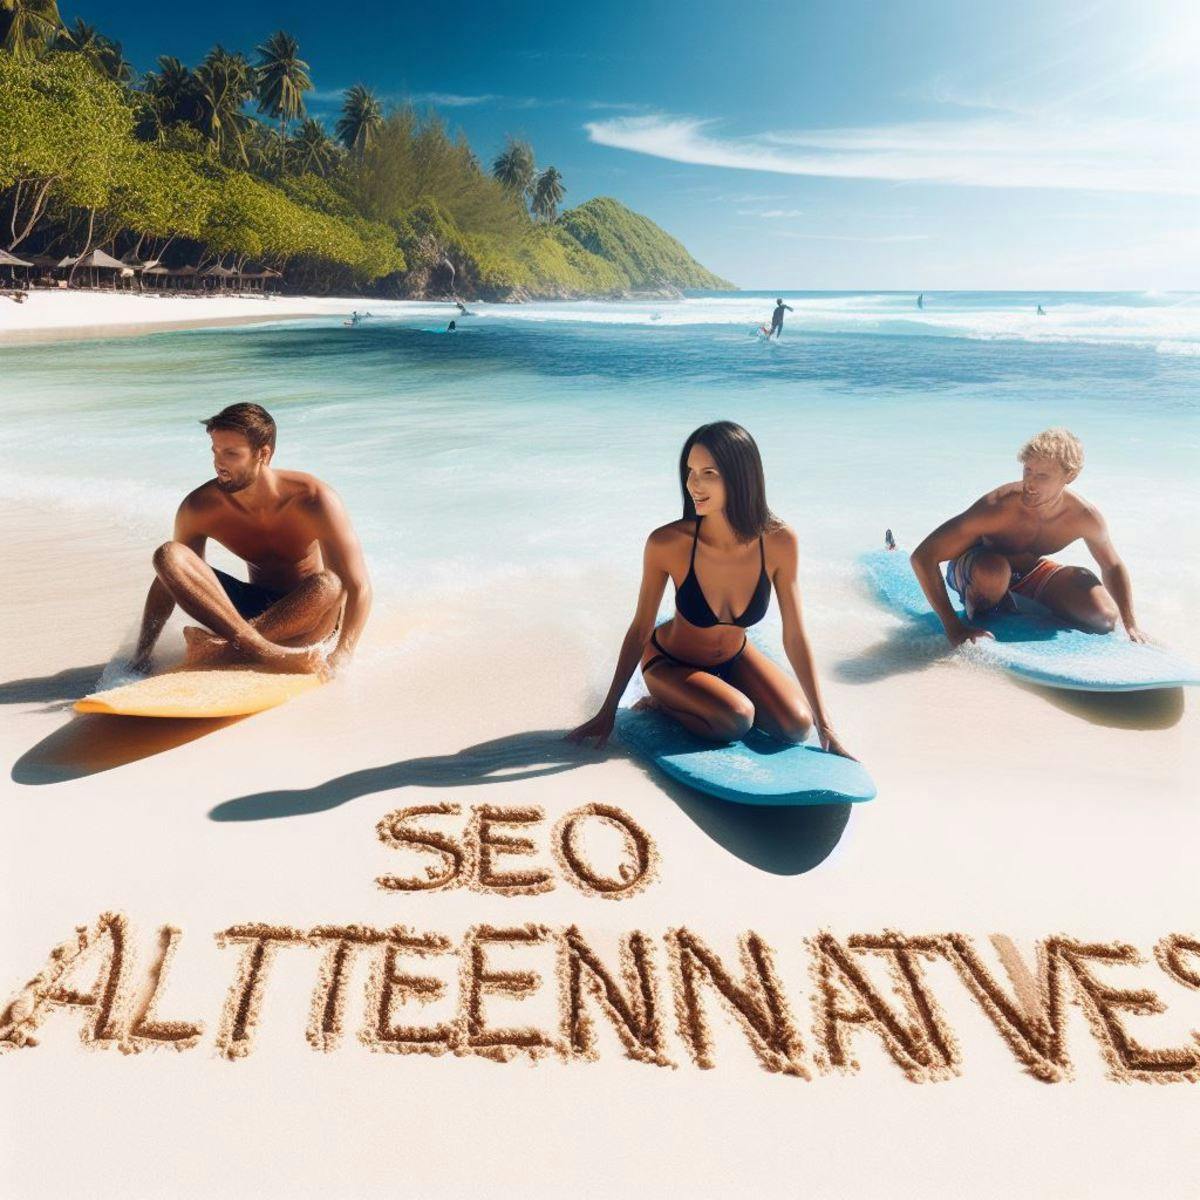 7 Surfer SEO Alternatives for Enhanced Content Marketing